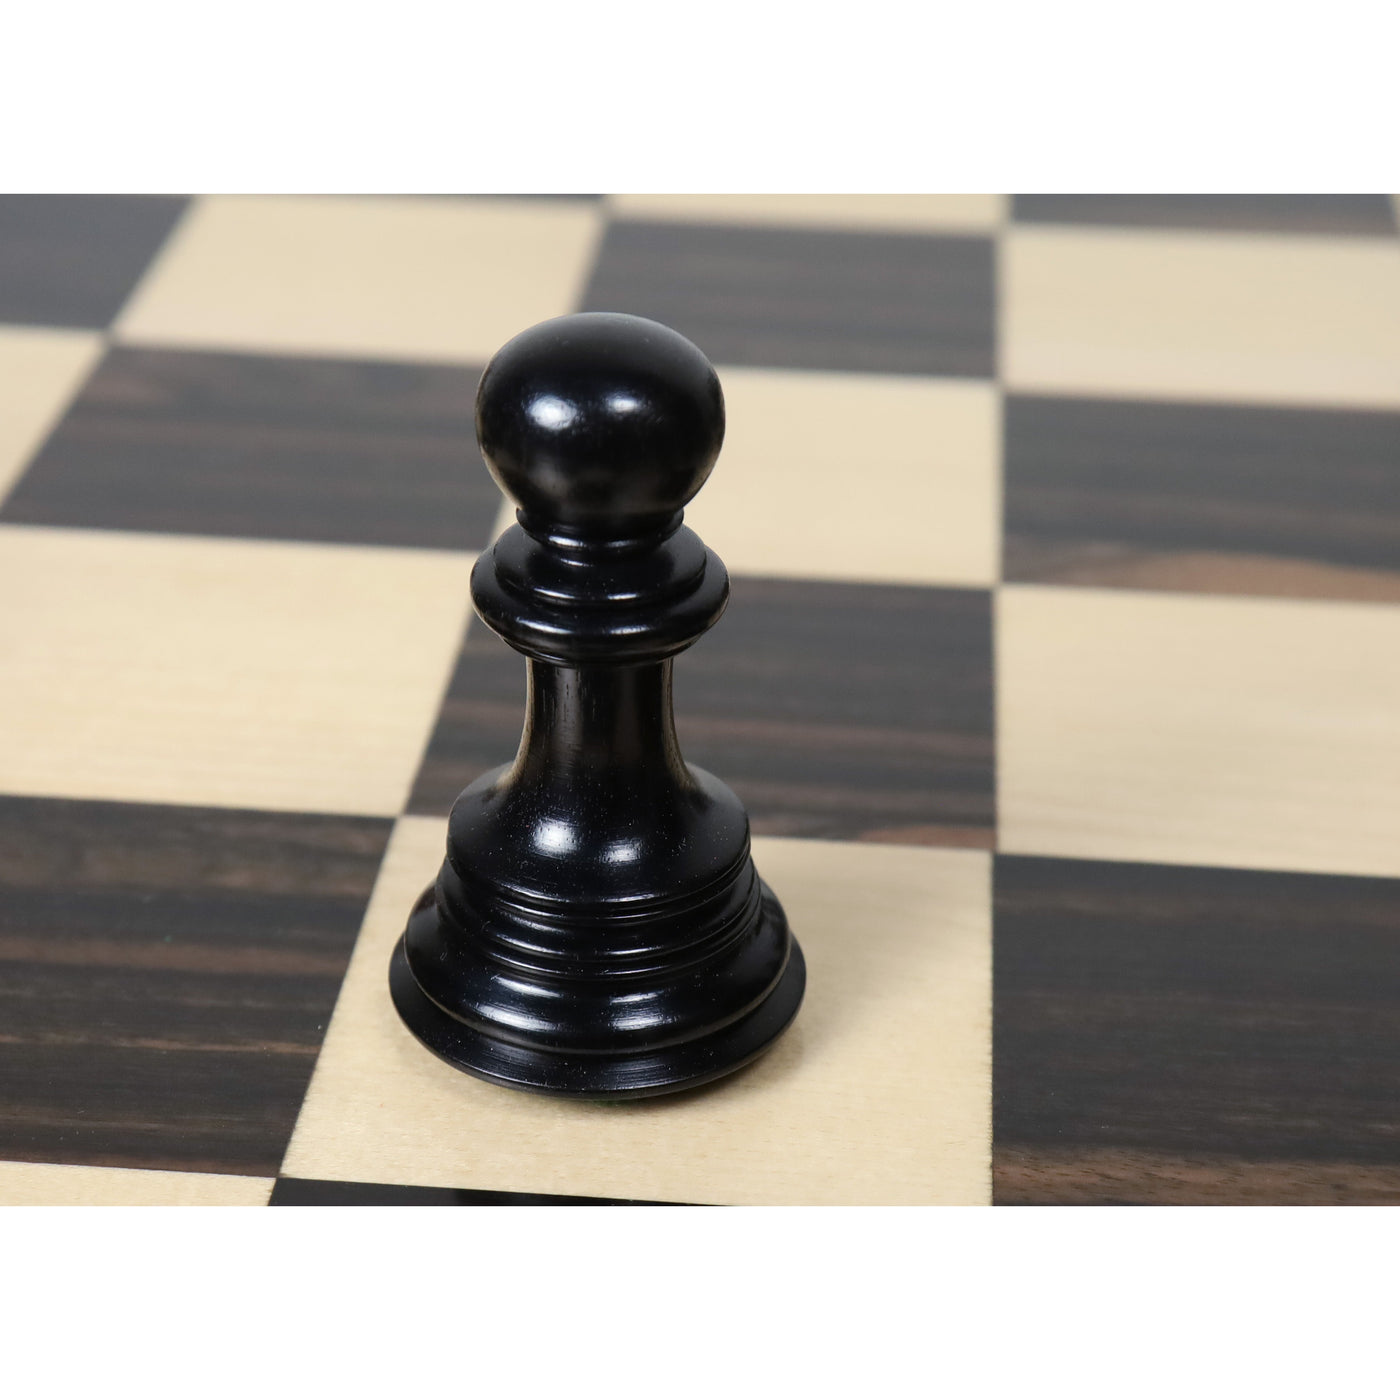 Mogul Staunton Luxury Chess Pieces